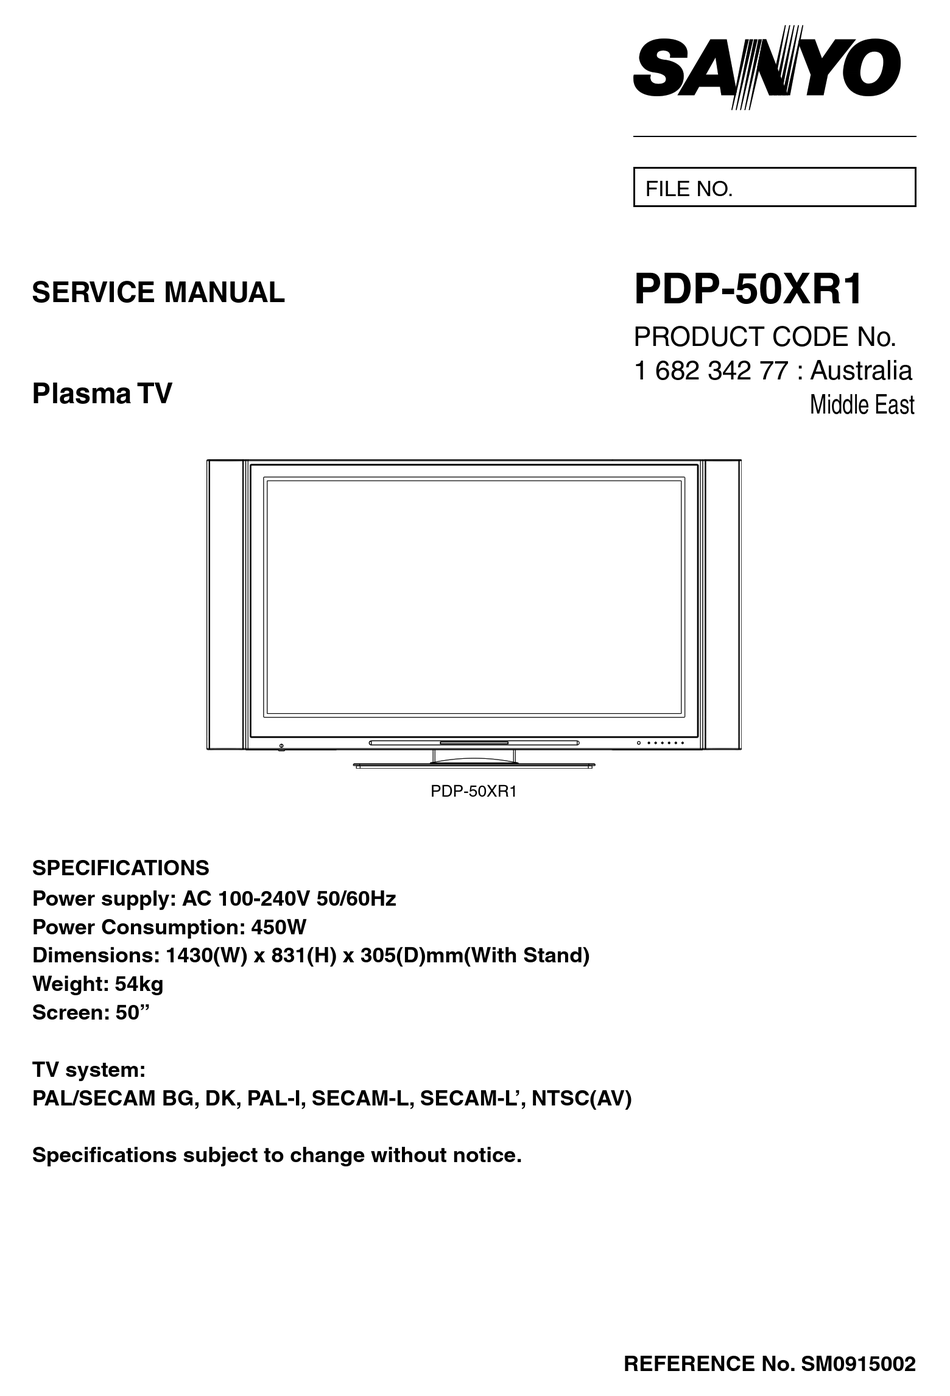 SANYO PDP-50XR1 SERVICE MANUAL Pdf Download | ManualsLib